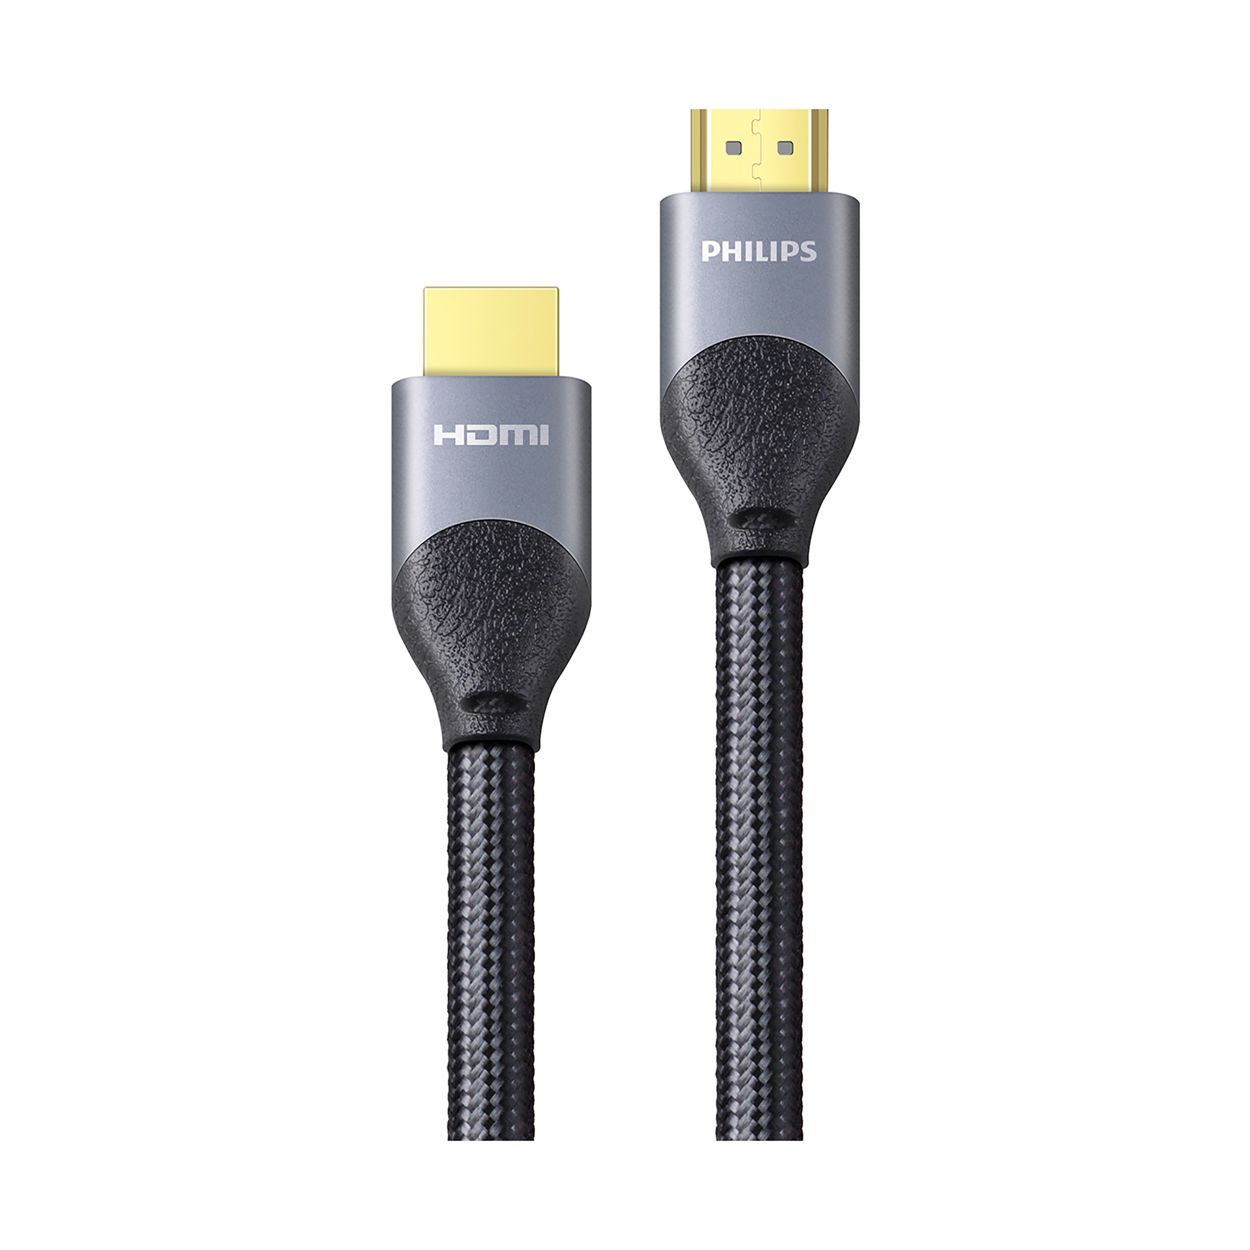 HDMI Premium-certificeret kabel